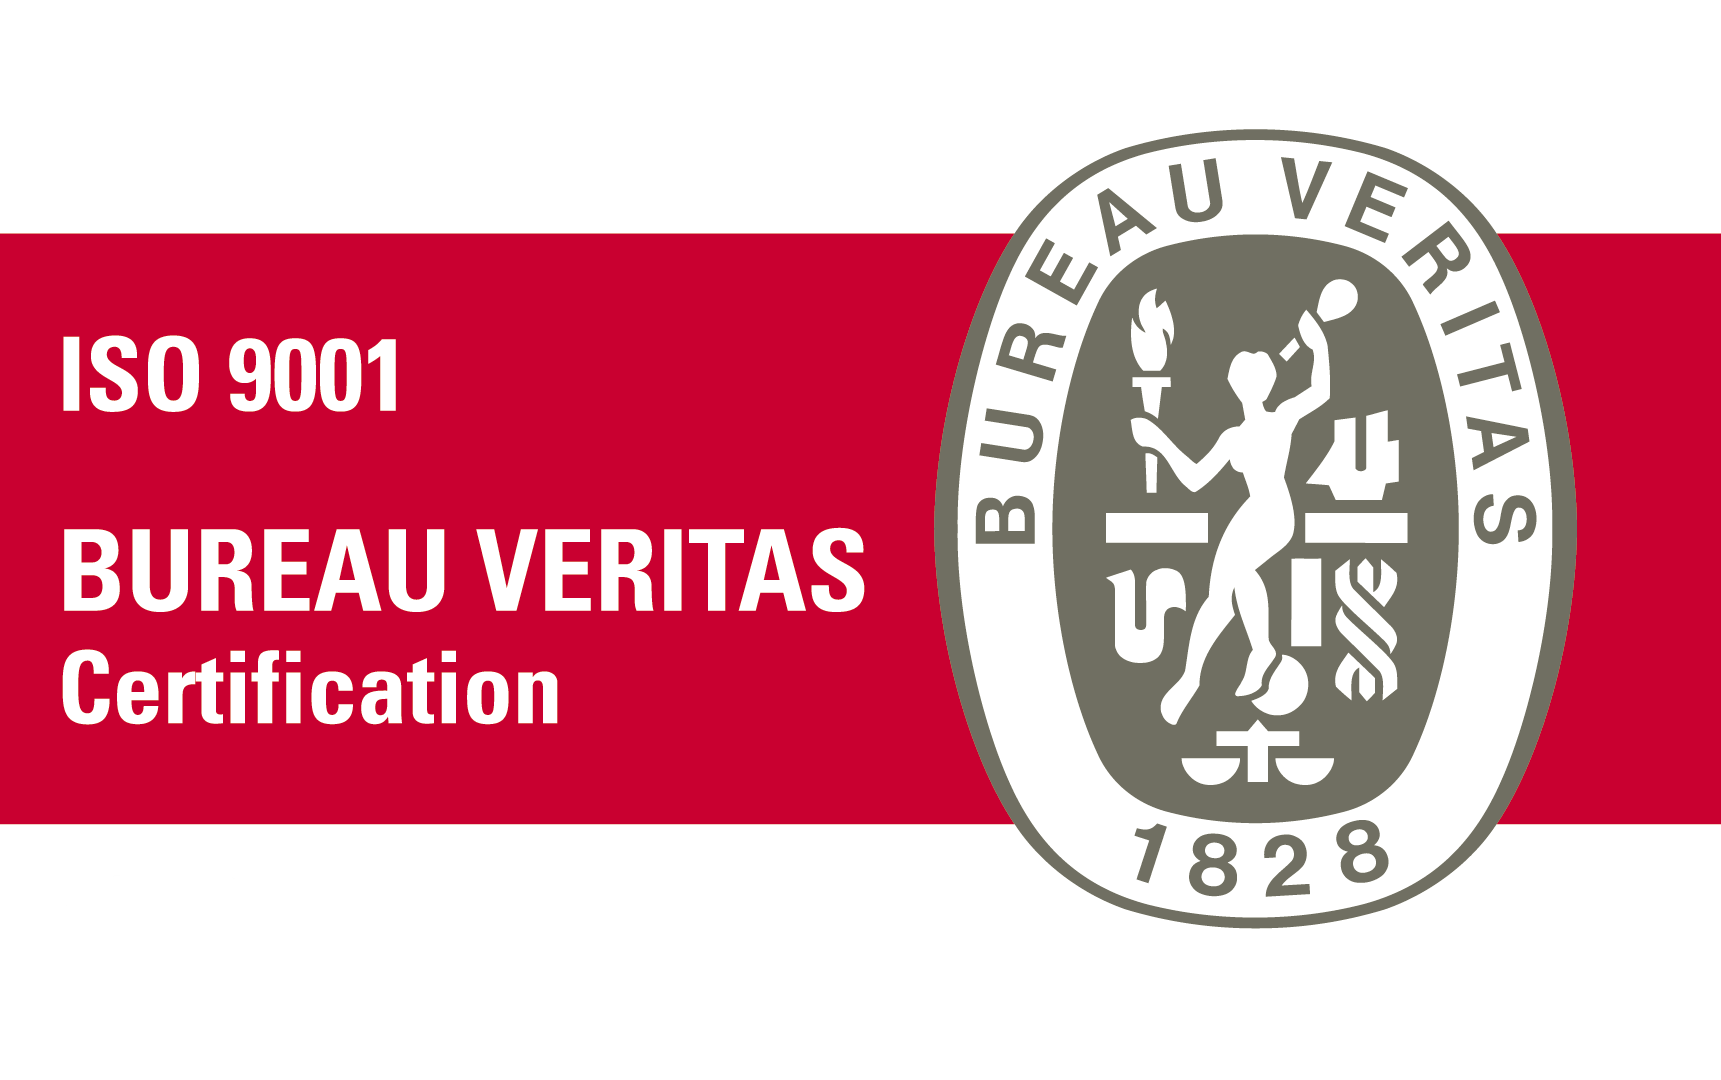 Certification ISO 9001 Bureau Veritas